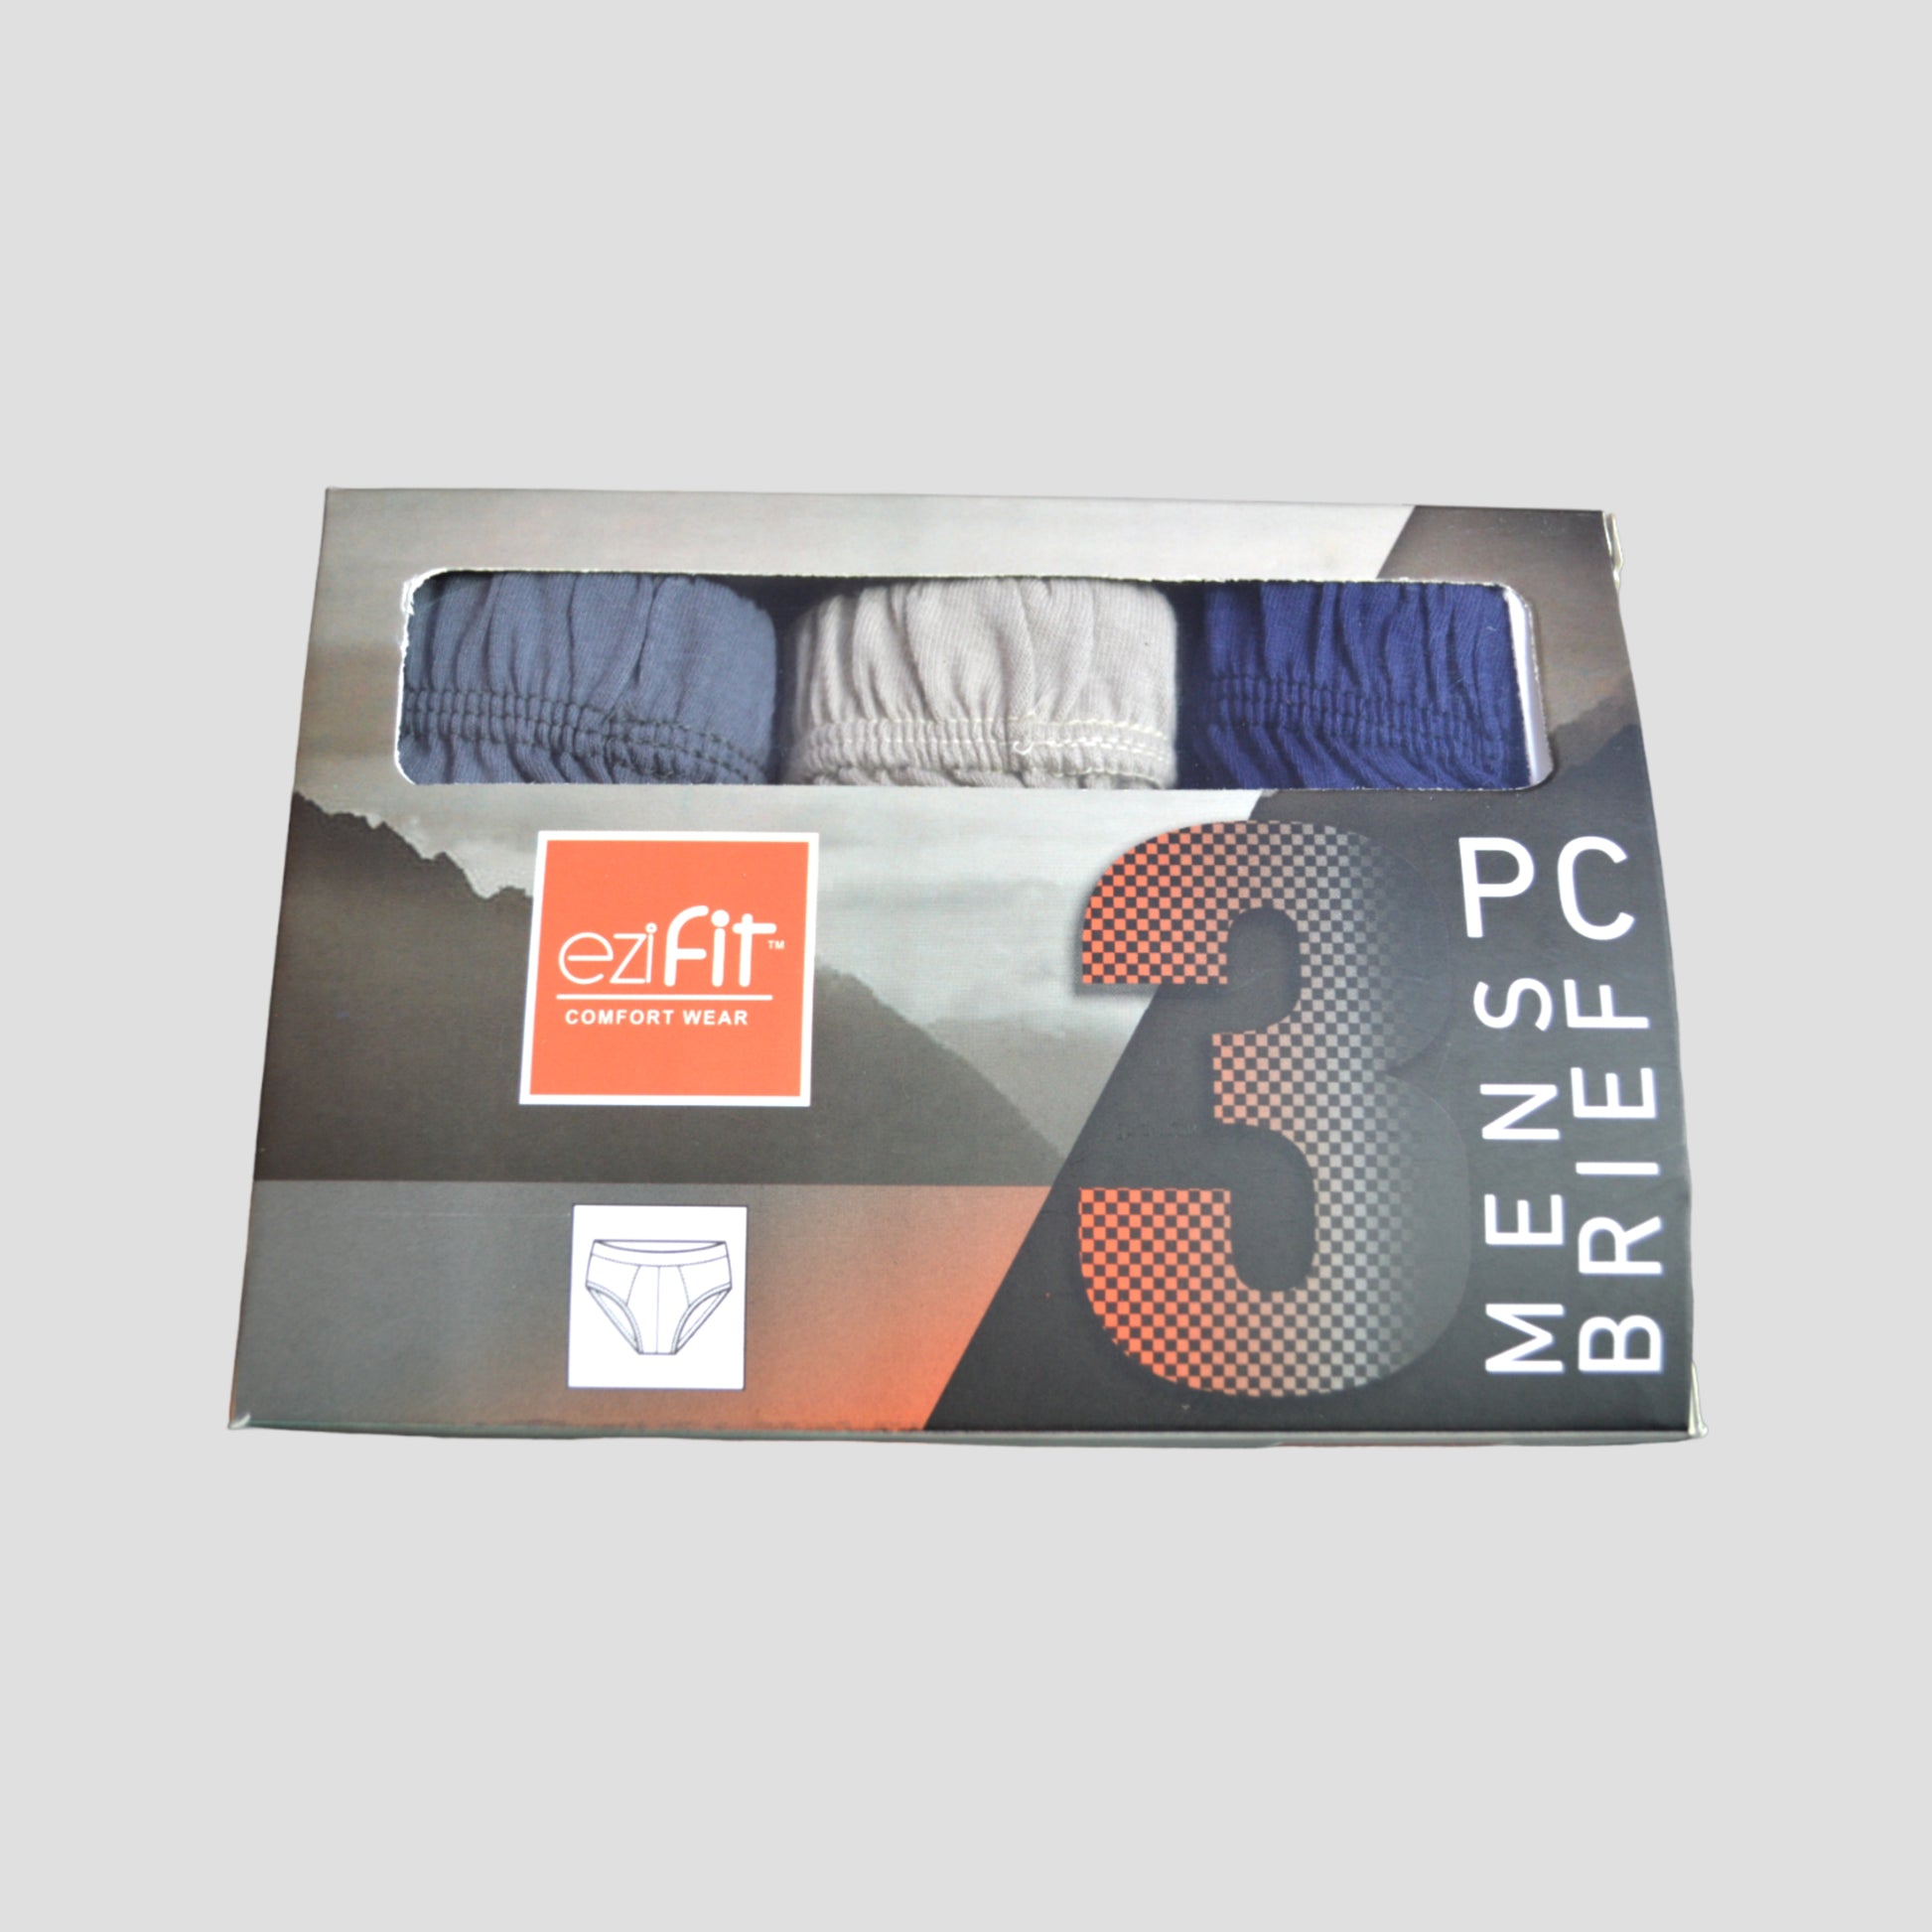 EziFit Pure Combed Cotton Fabric Underwear Briefs For Men